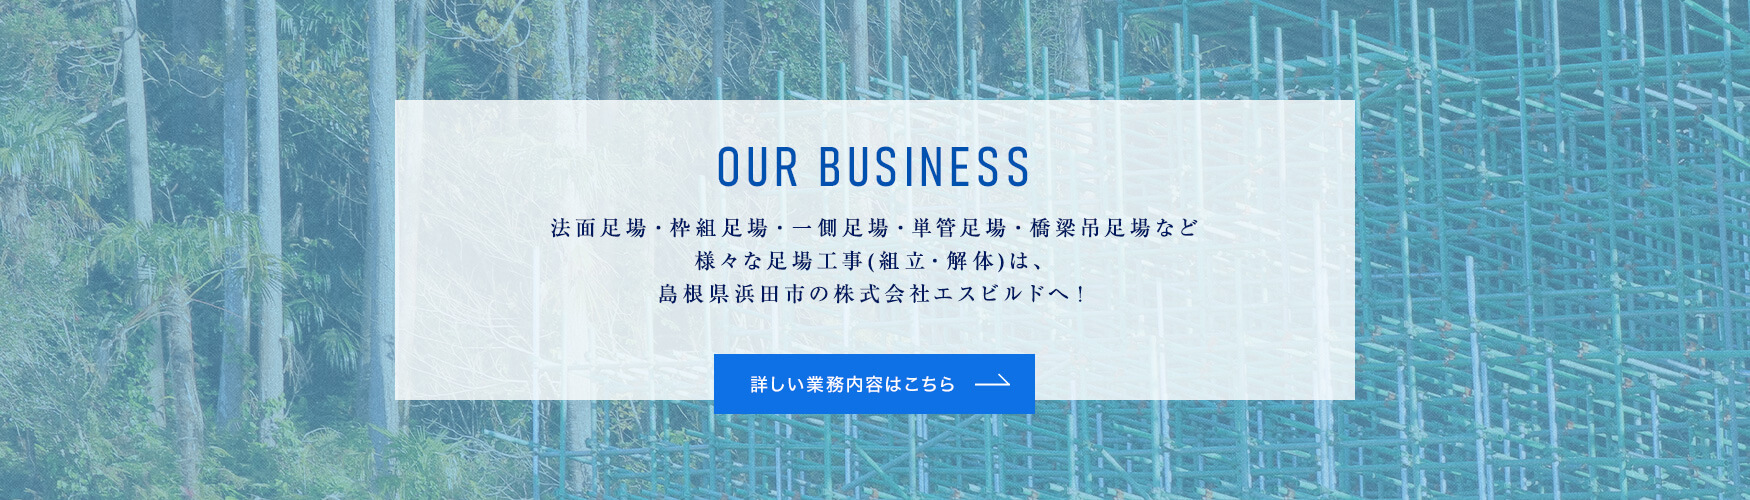 business_banner